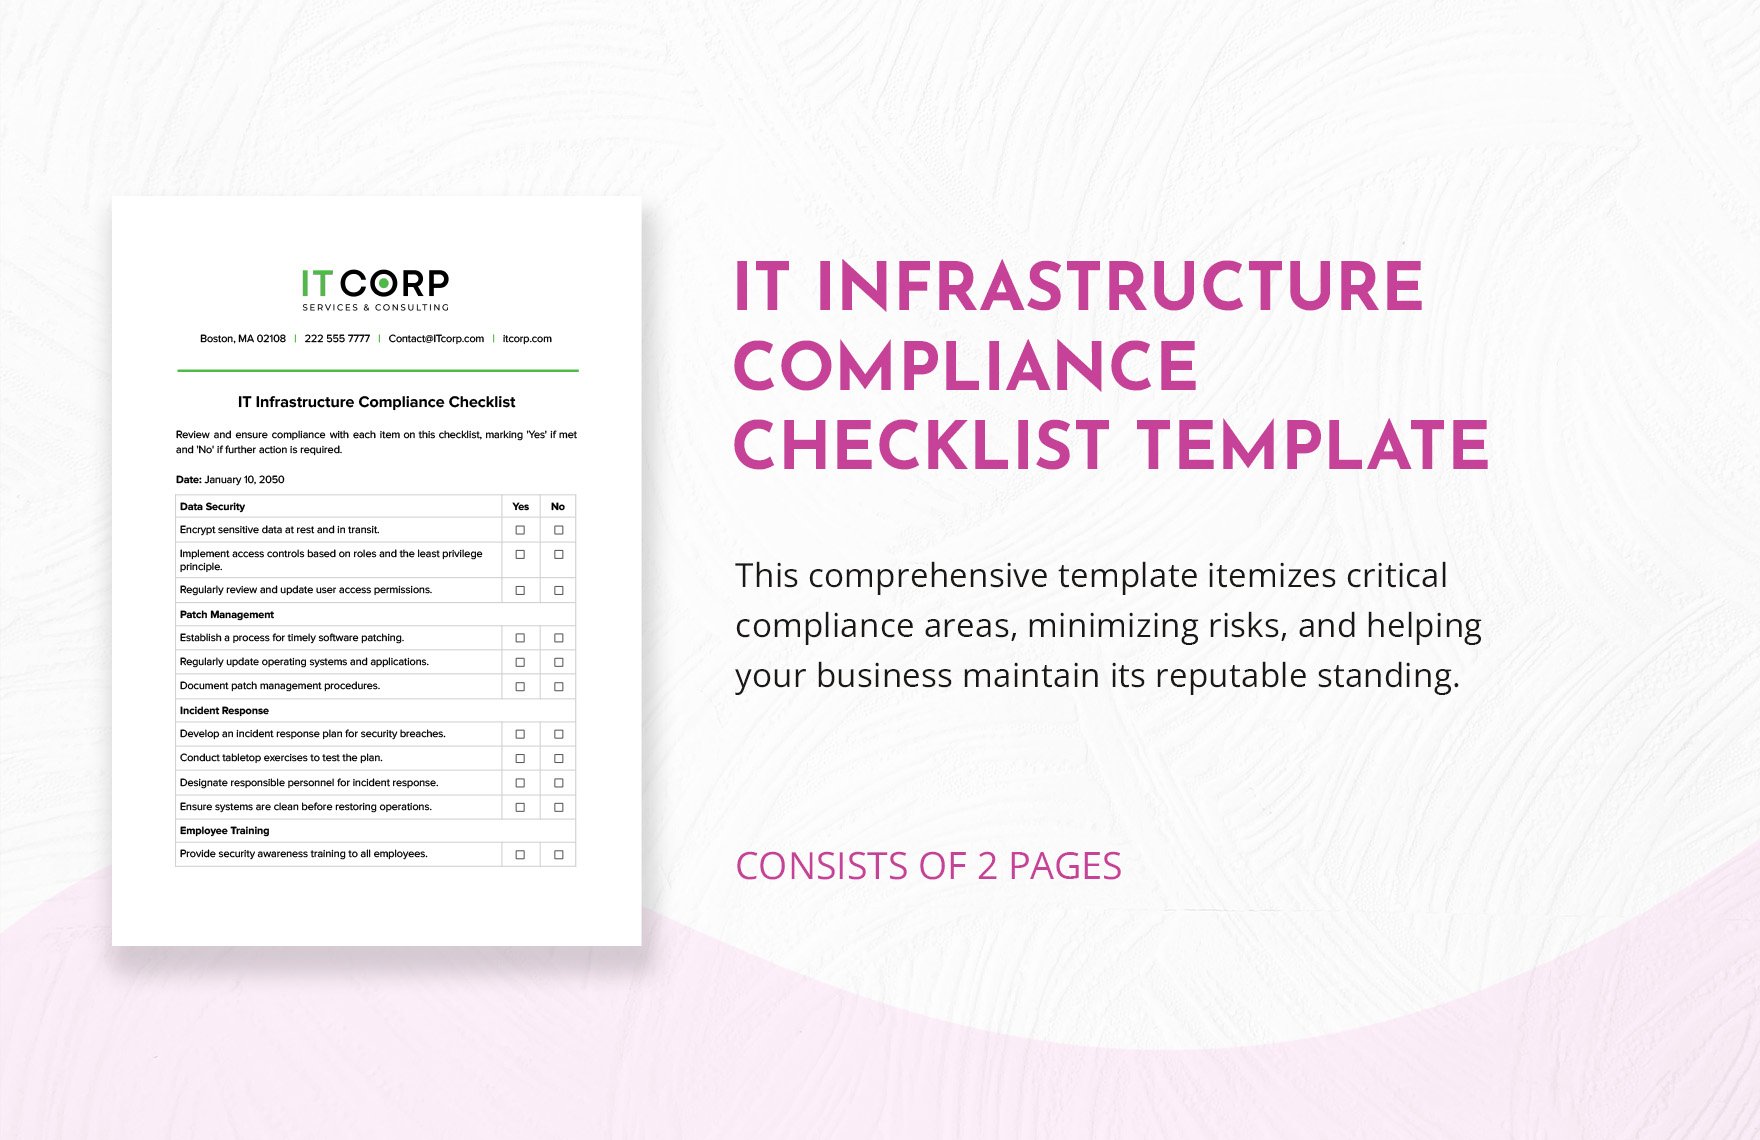 IT Infrastructure Compliance Checklist Template